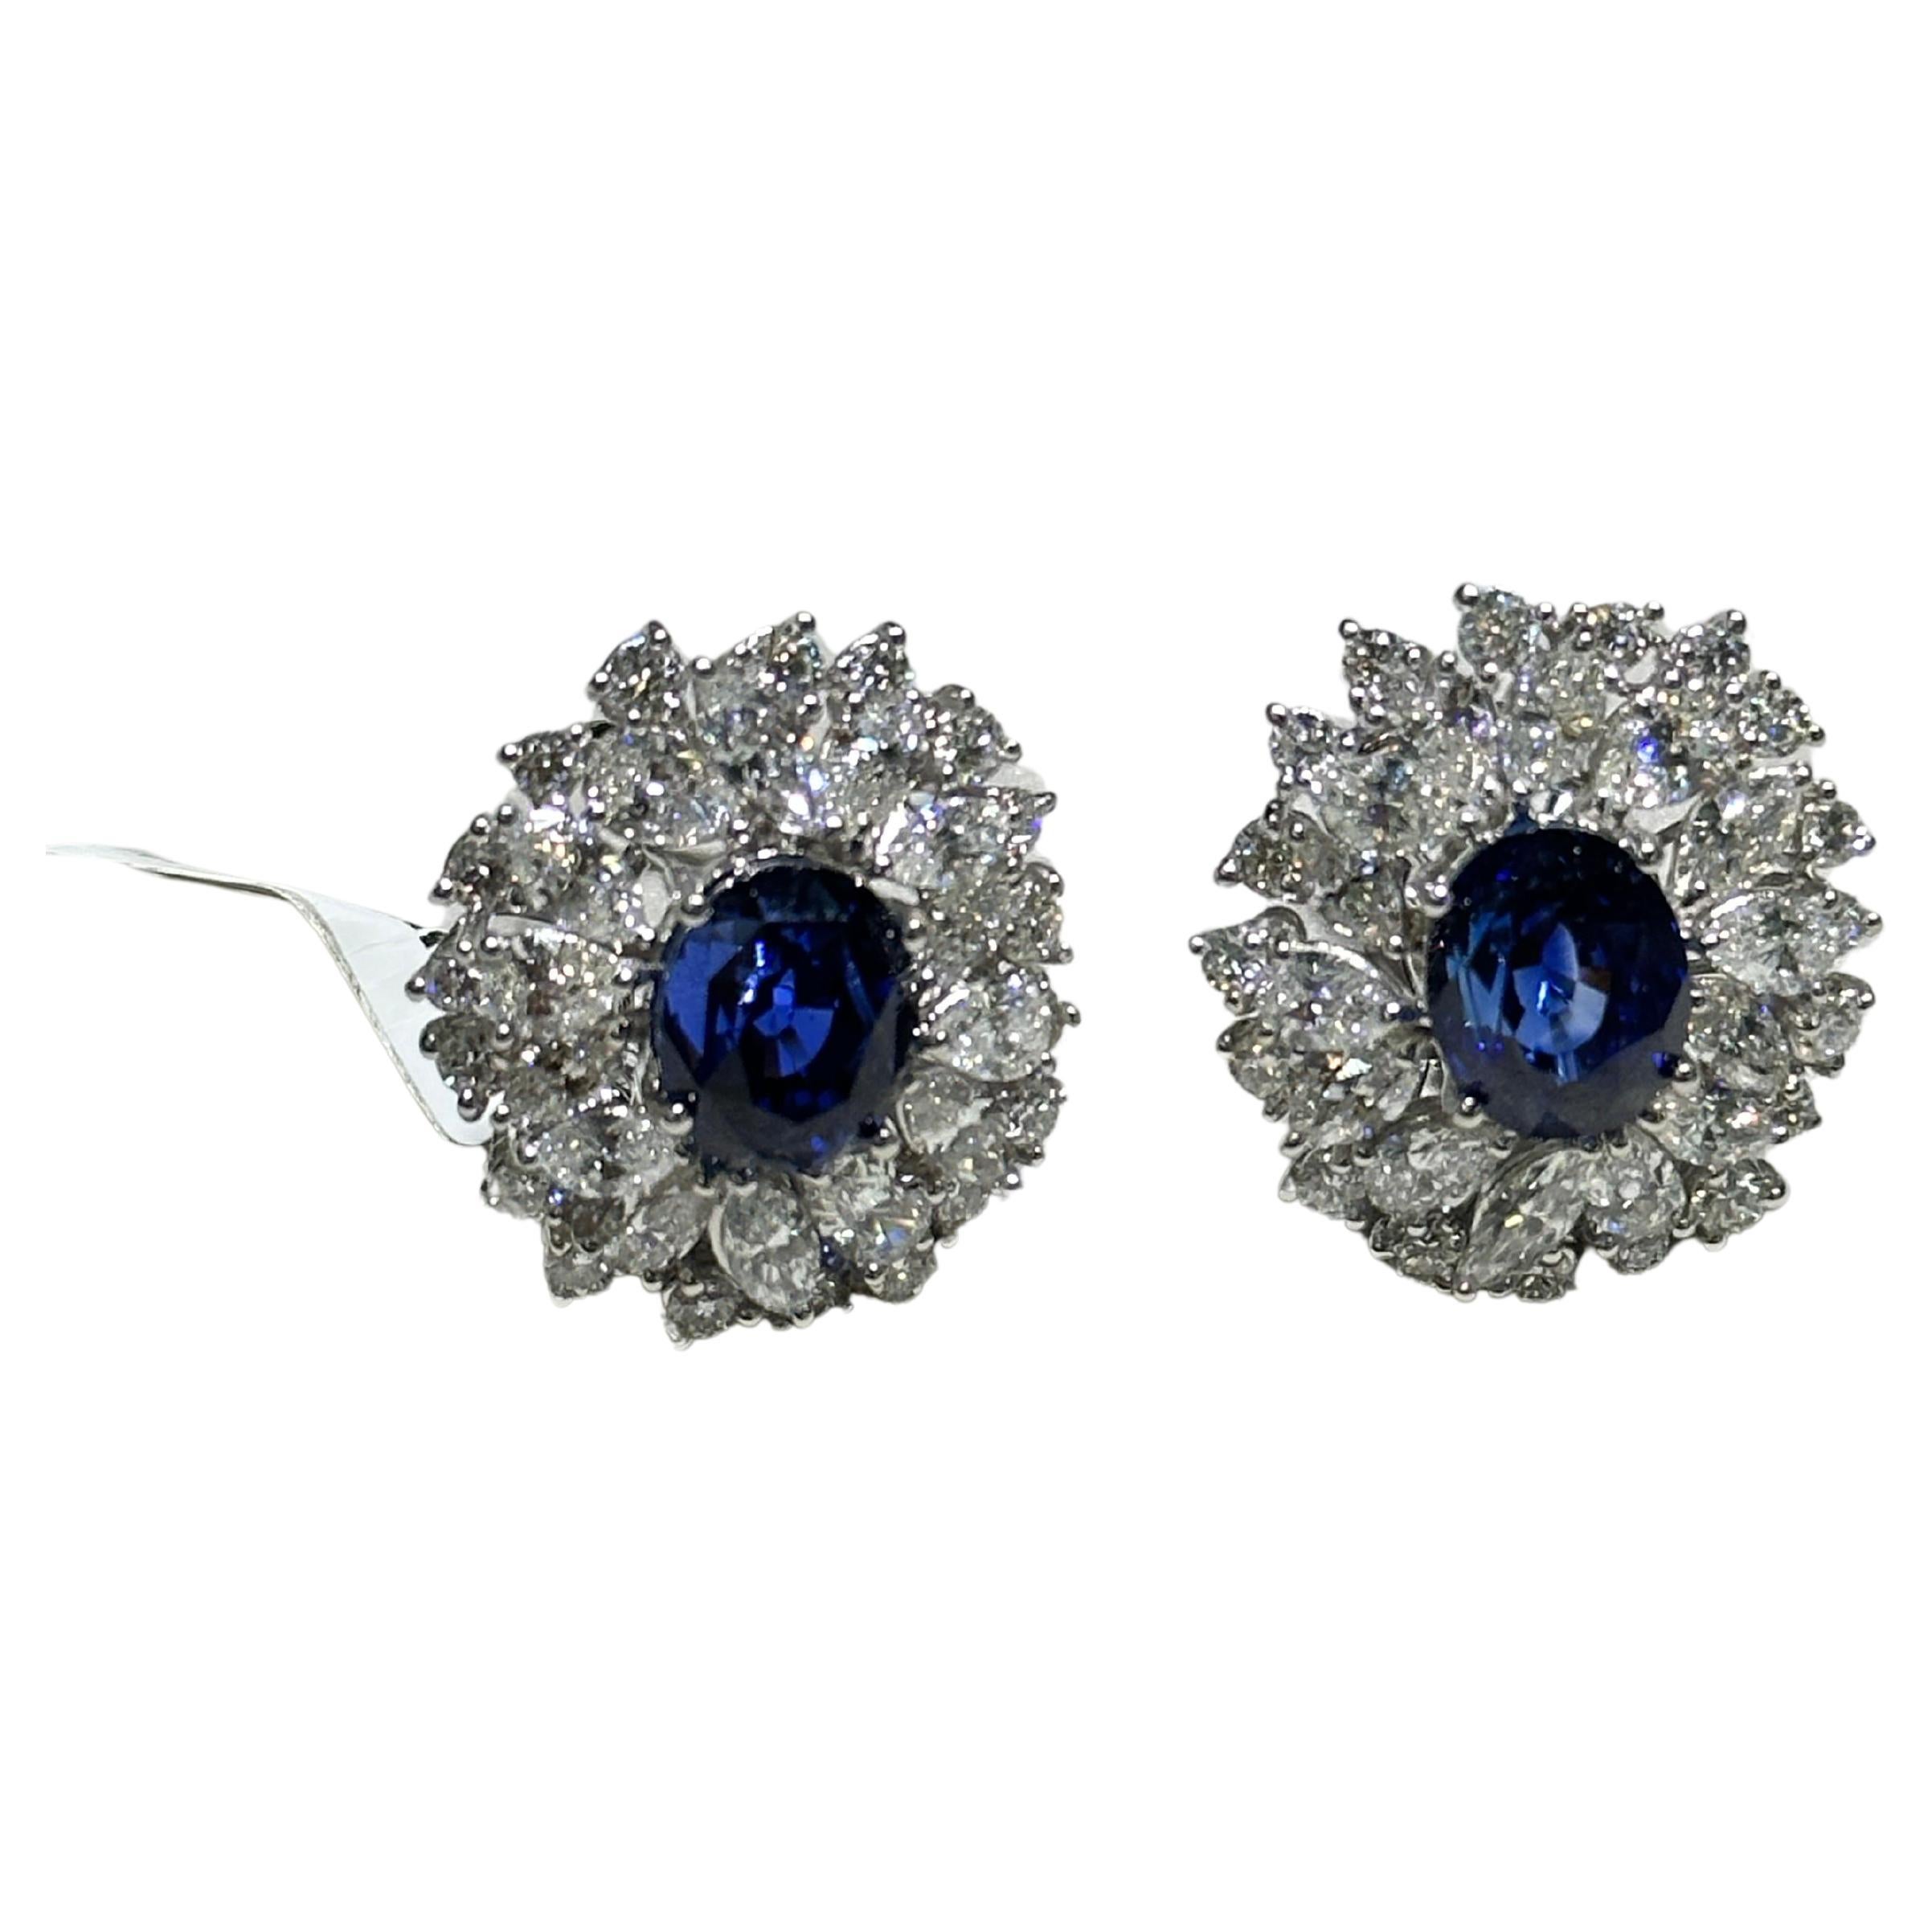 NWT $317, 000 Or 18KT Rare Gorgeous 18CT Blue Sapphire Diamond Earrings